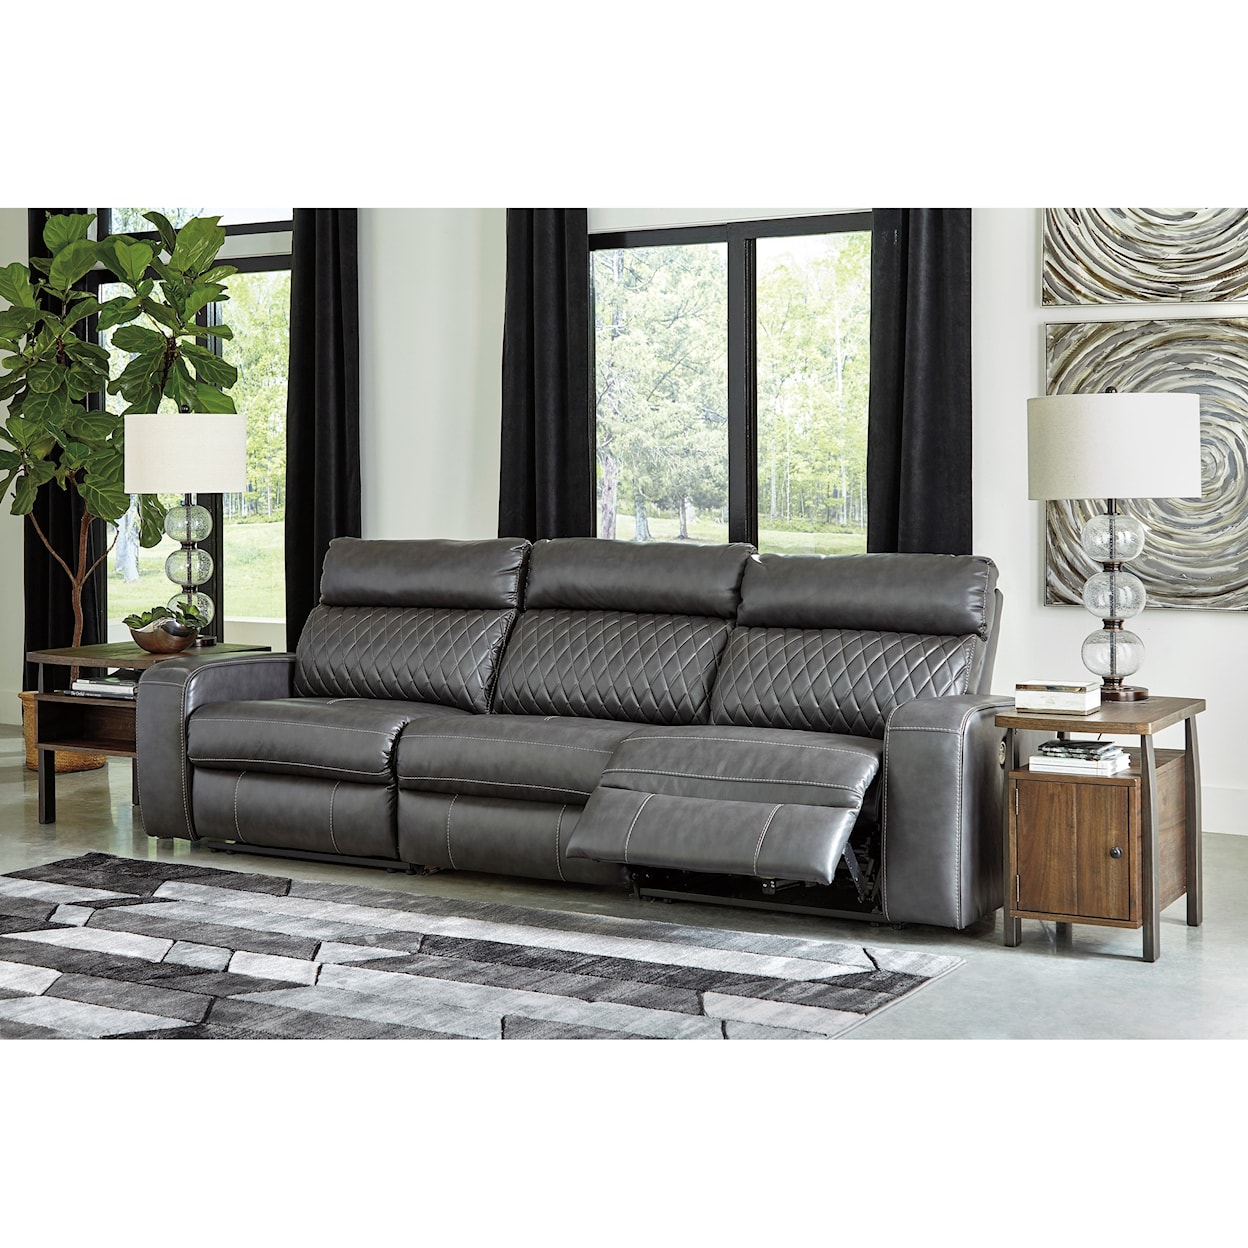 Signature Design by Ashley Furniture Samperstone Power Reclining Sofa